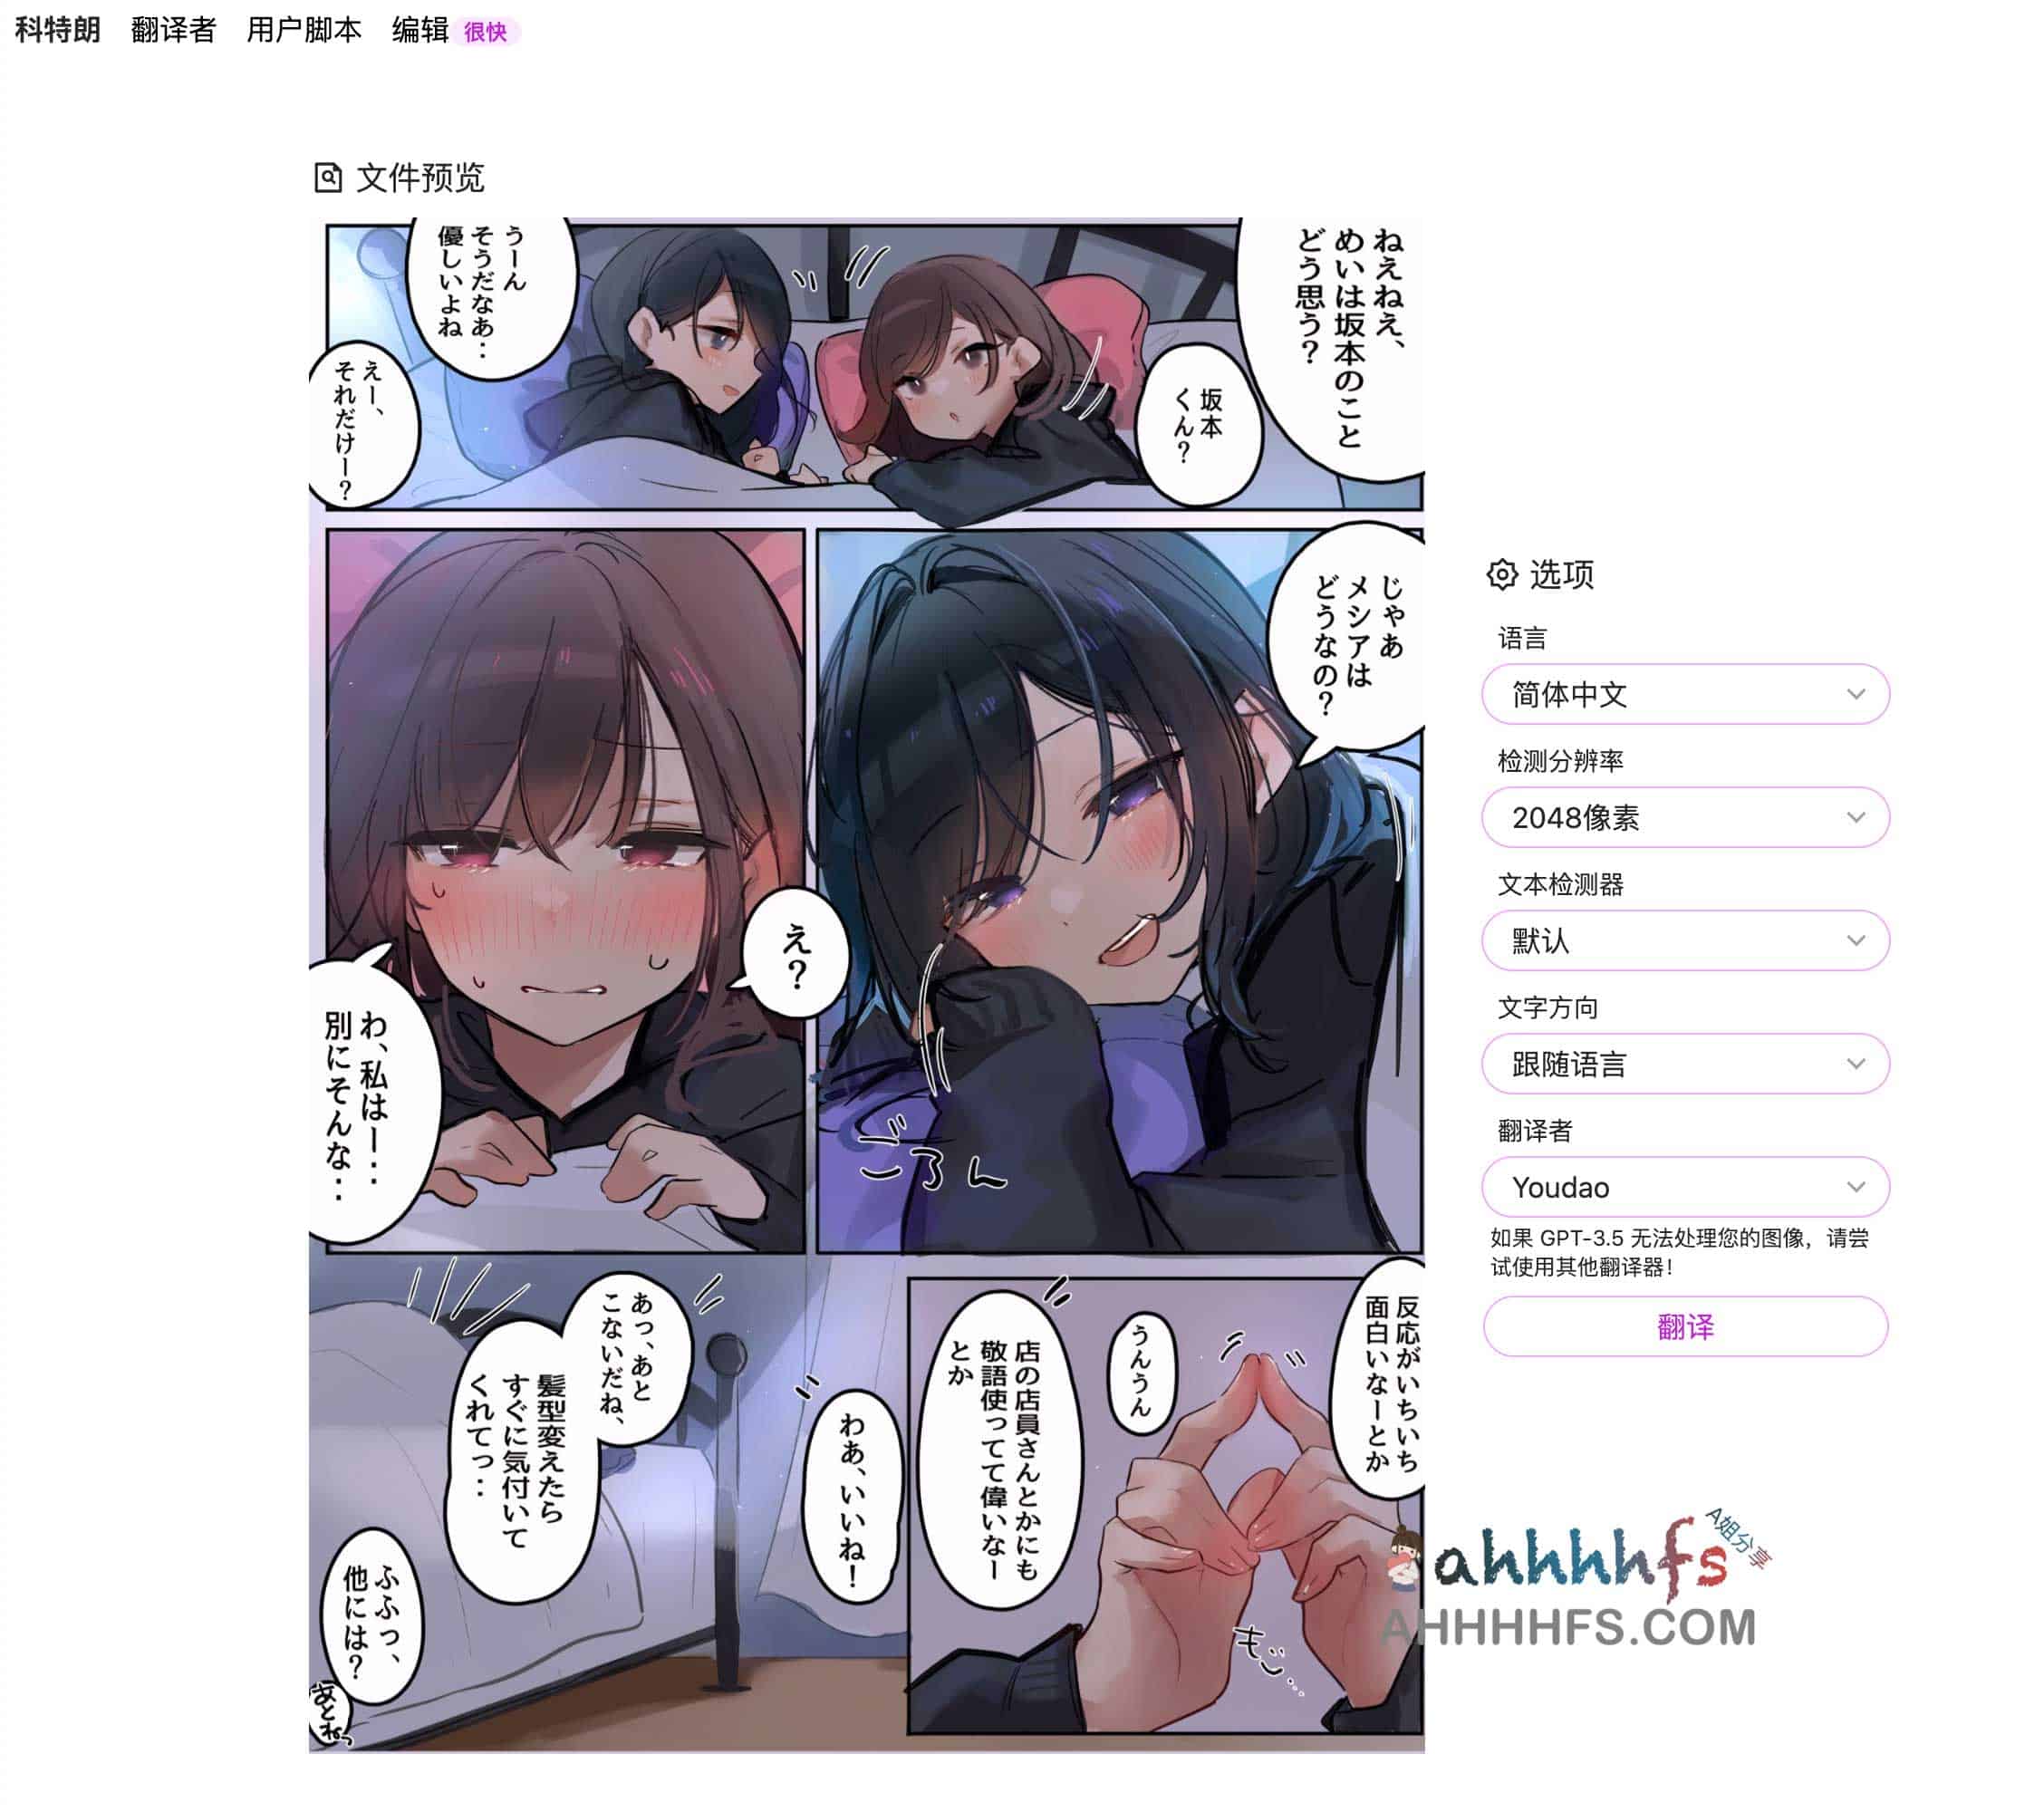 Image Manga Translator-开源图片翻译工具 漫画图片翻译器